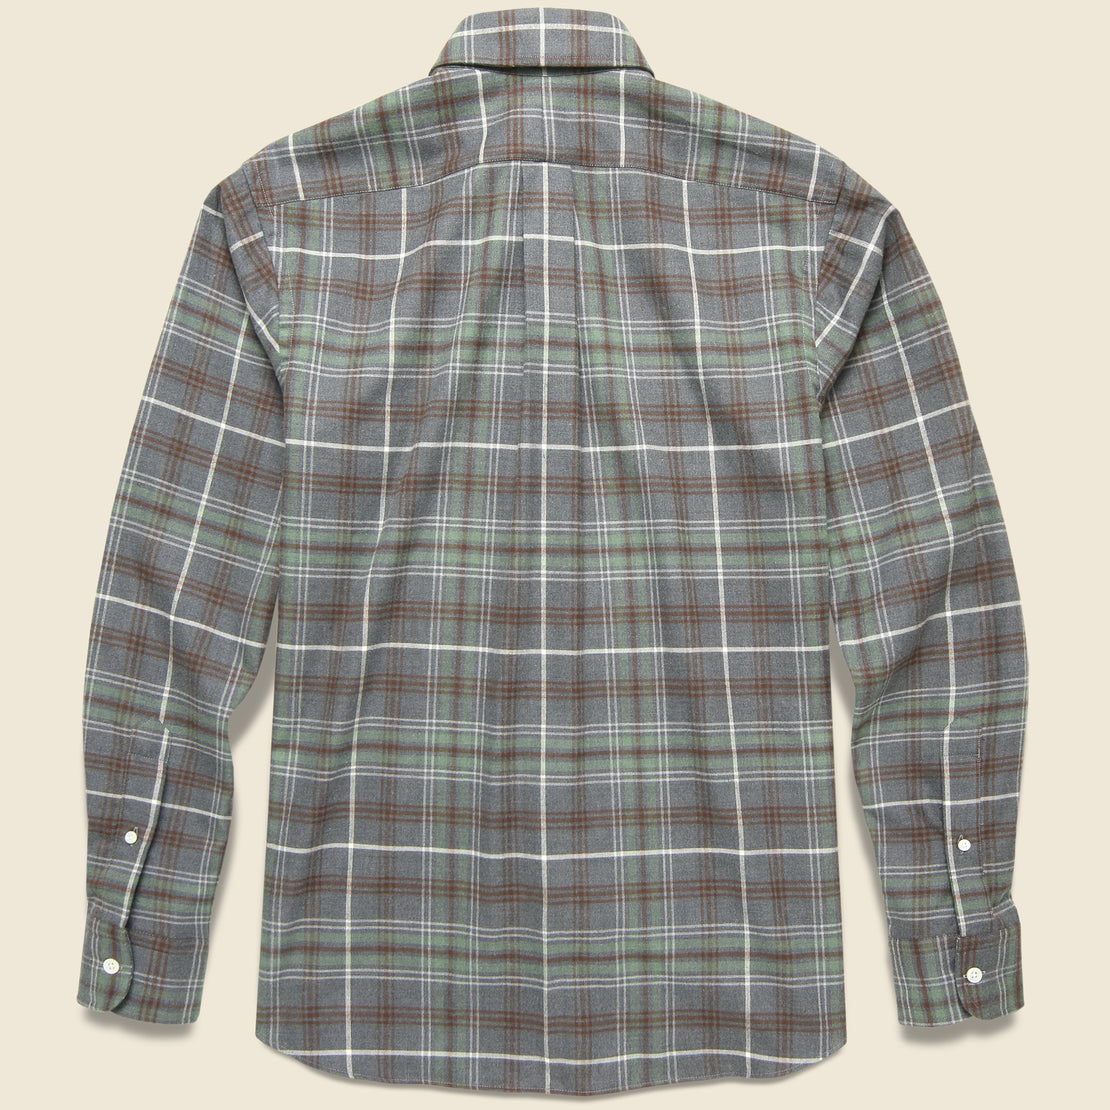 Brushed Plaid Shirt - Moss/Brown/Ecru - Hamilton Shirt Co. - STAG Provisions - Tops - L/S Woven - Plaid